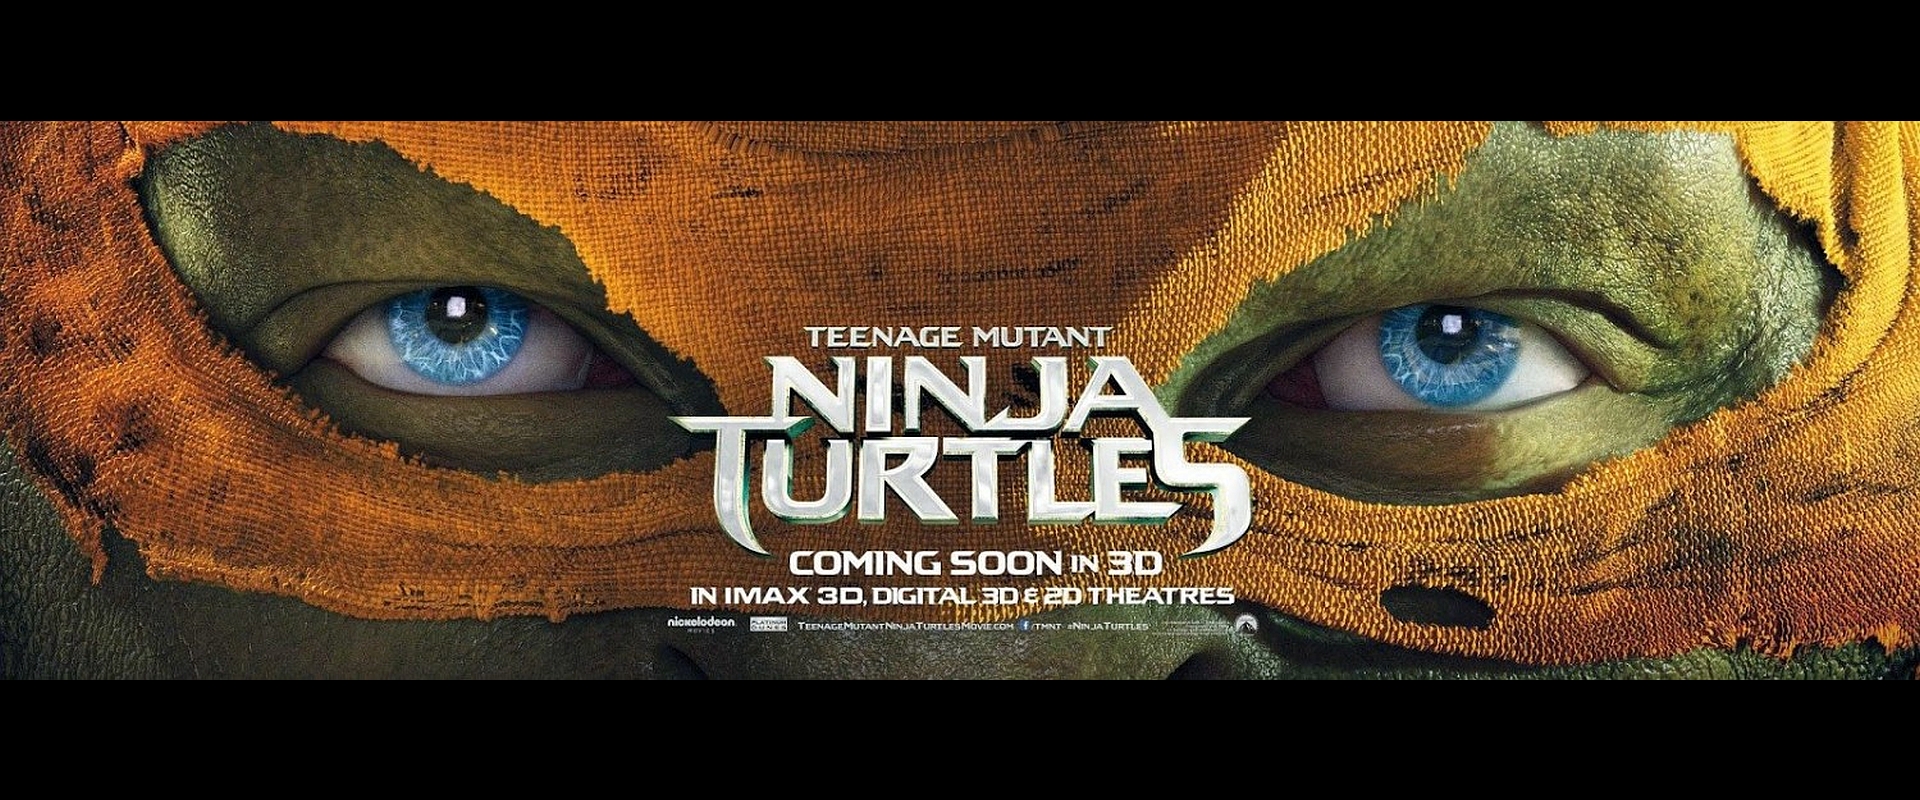 339716 Bild herunterladen filme, teenage mutant ninja turtles (2014), teenage mutant ninja turtles - Hintergrundbilder und Bildschirmschoner kostenlos